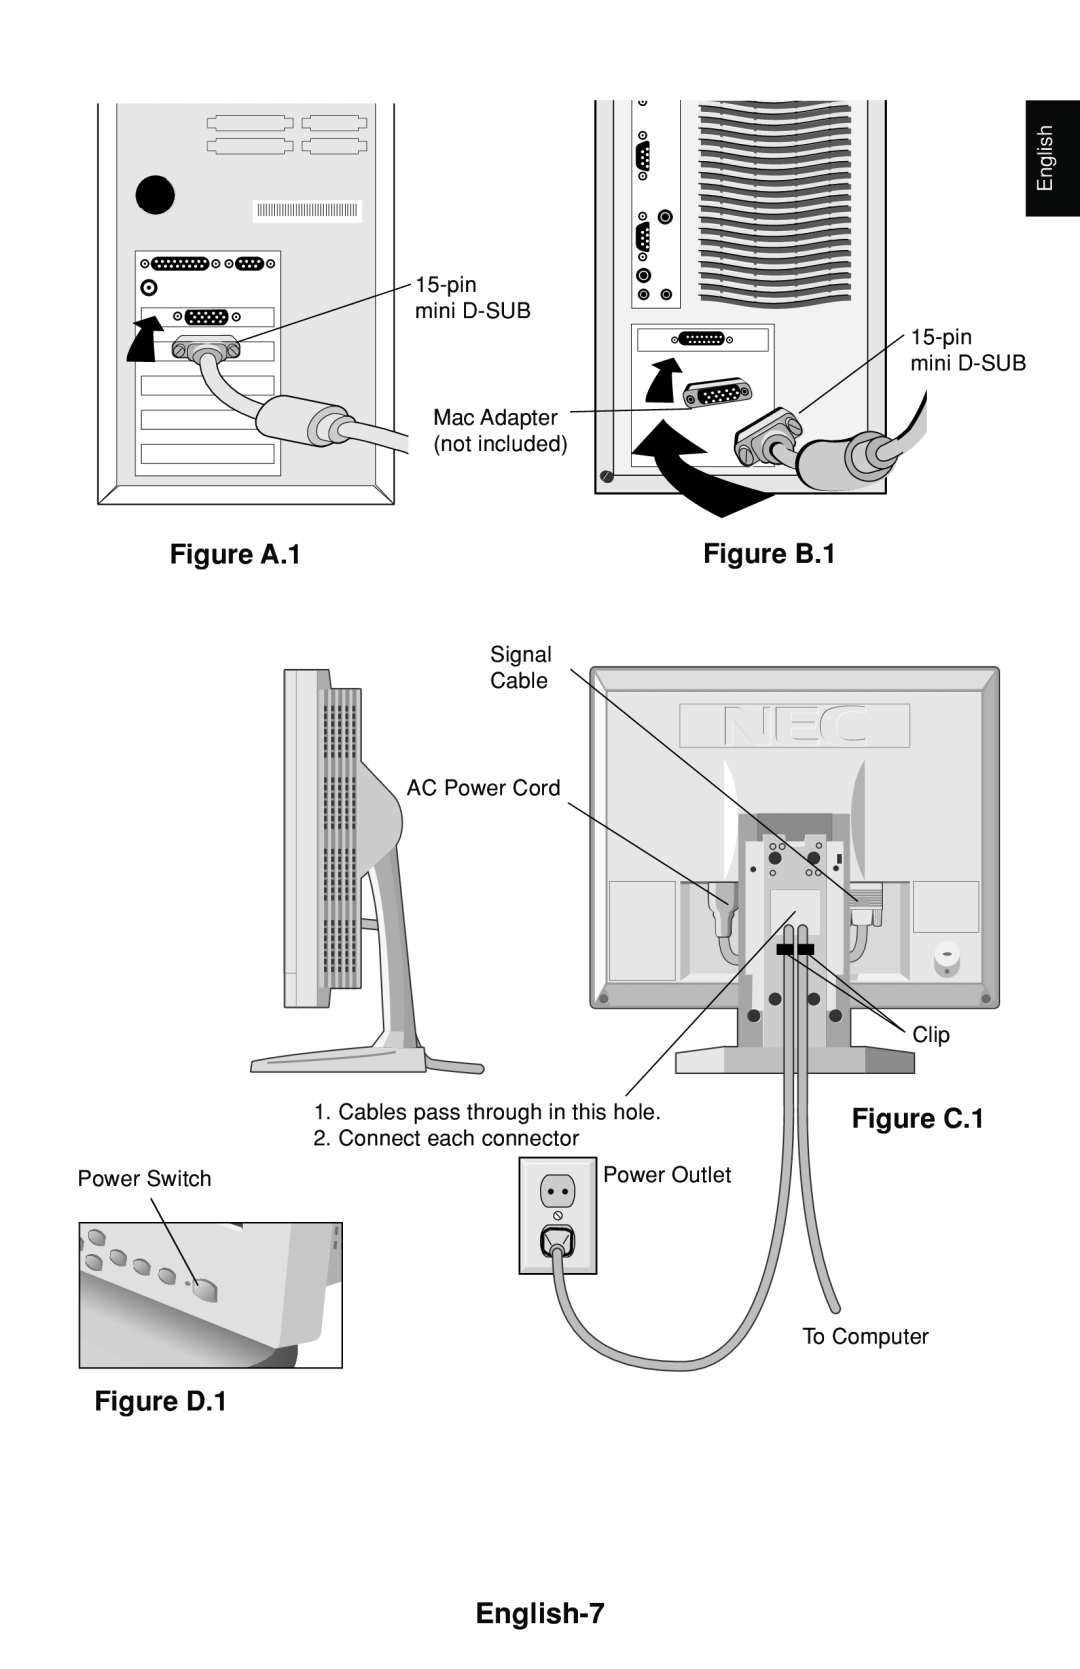 NEC LCD1530V user manual English-7, Figure A.1, Figure B.1, Figure C.1, Figure D.1 